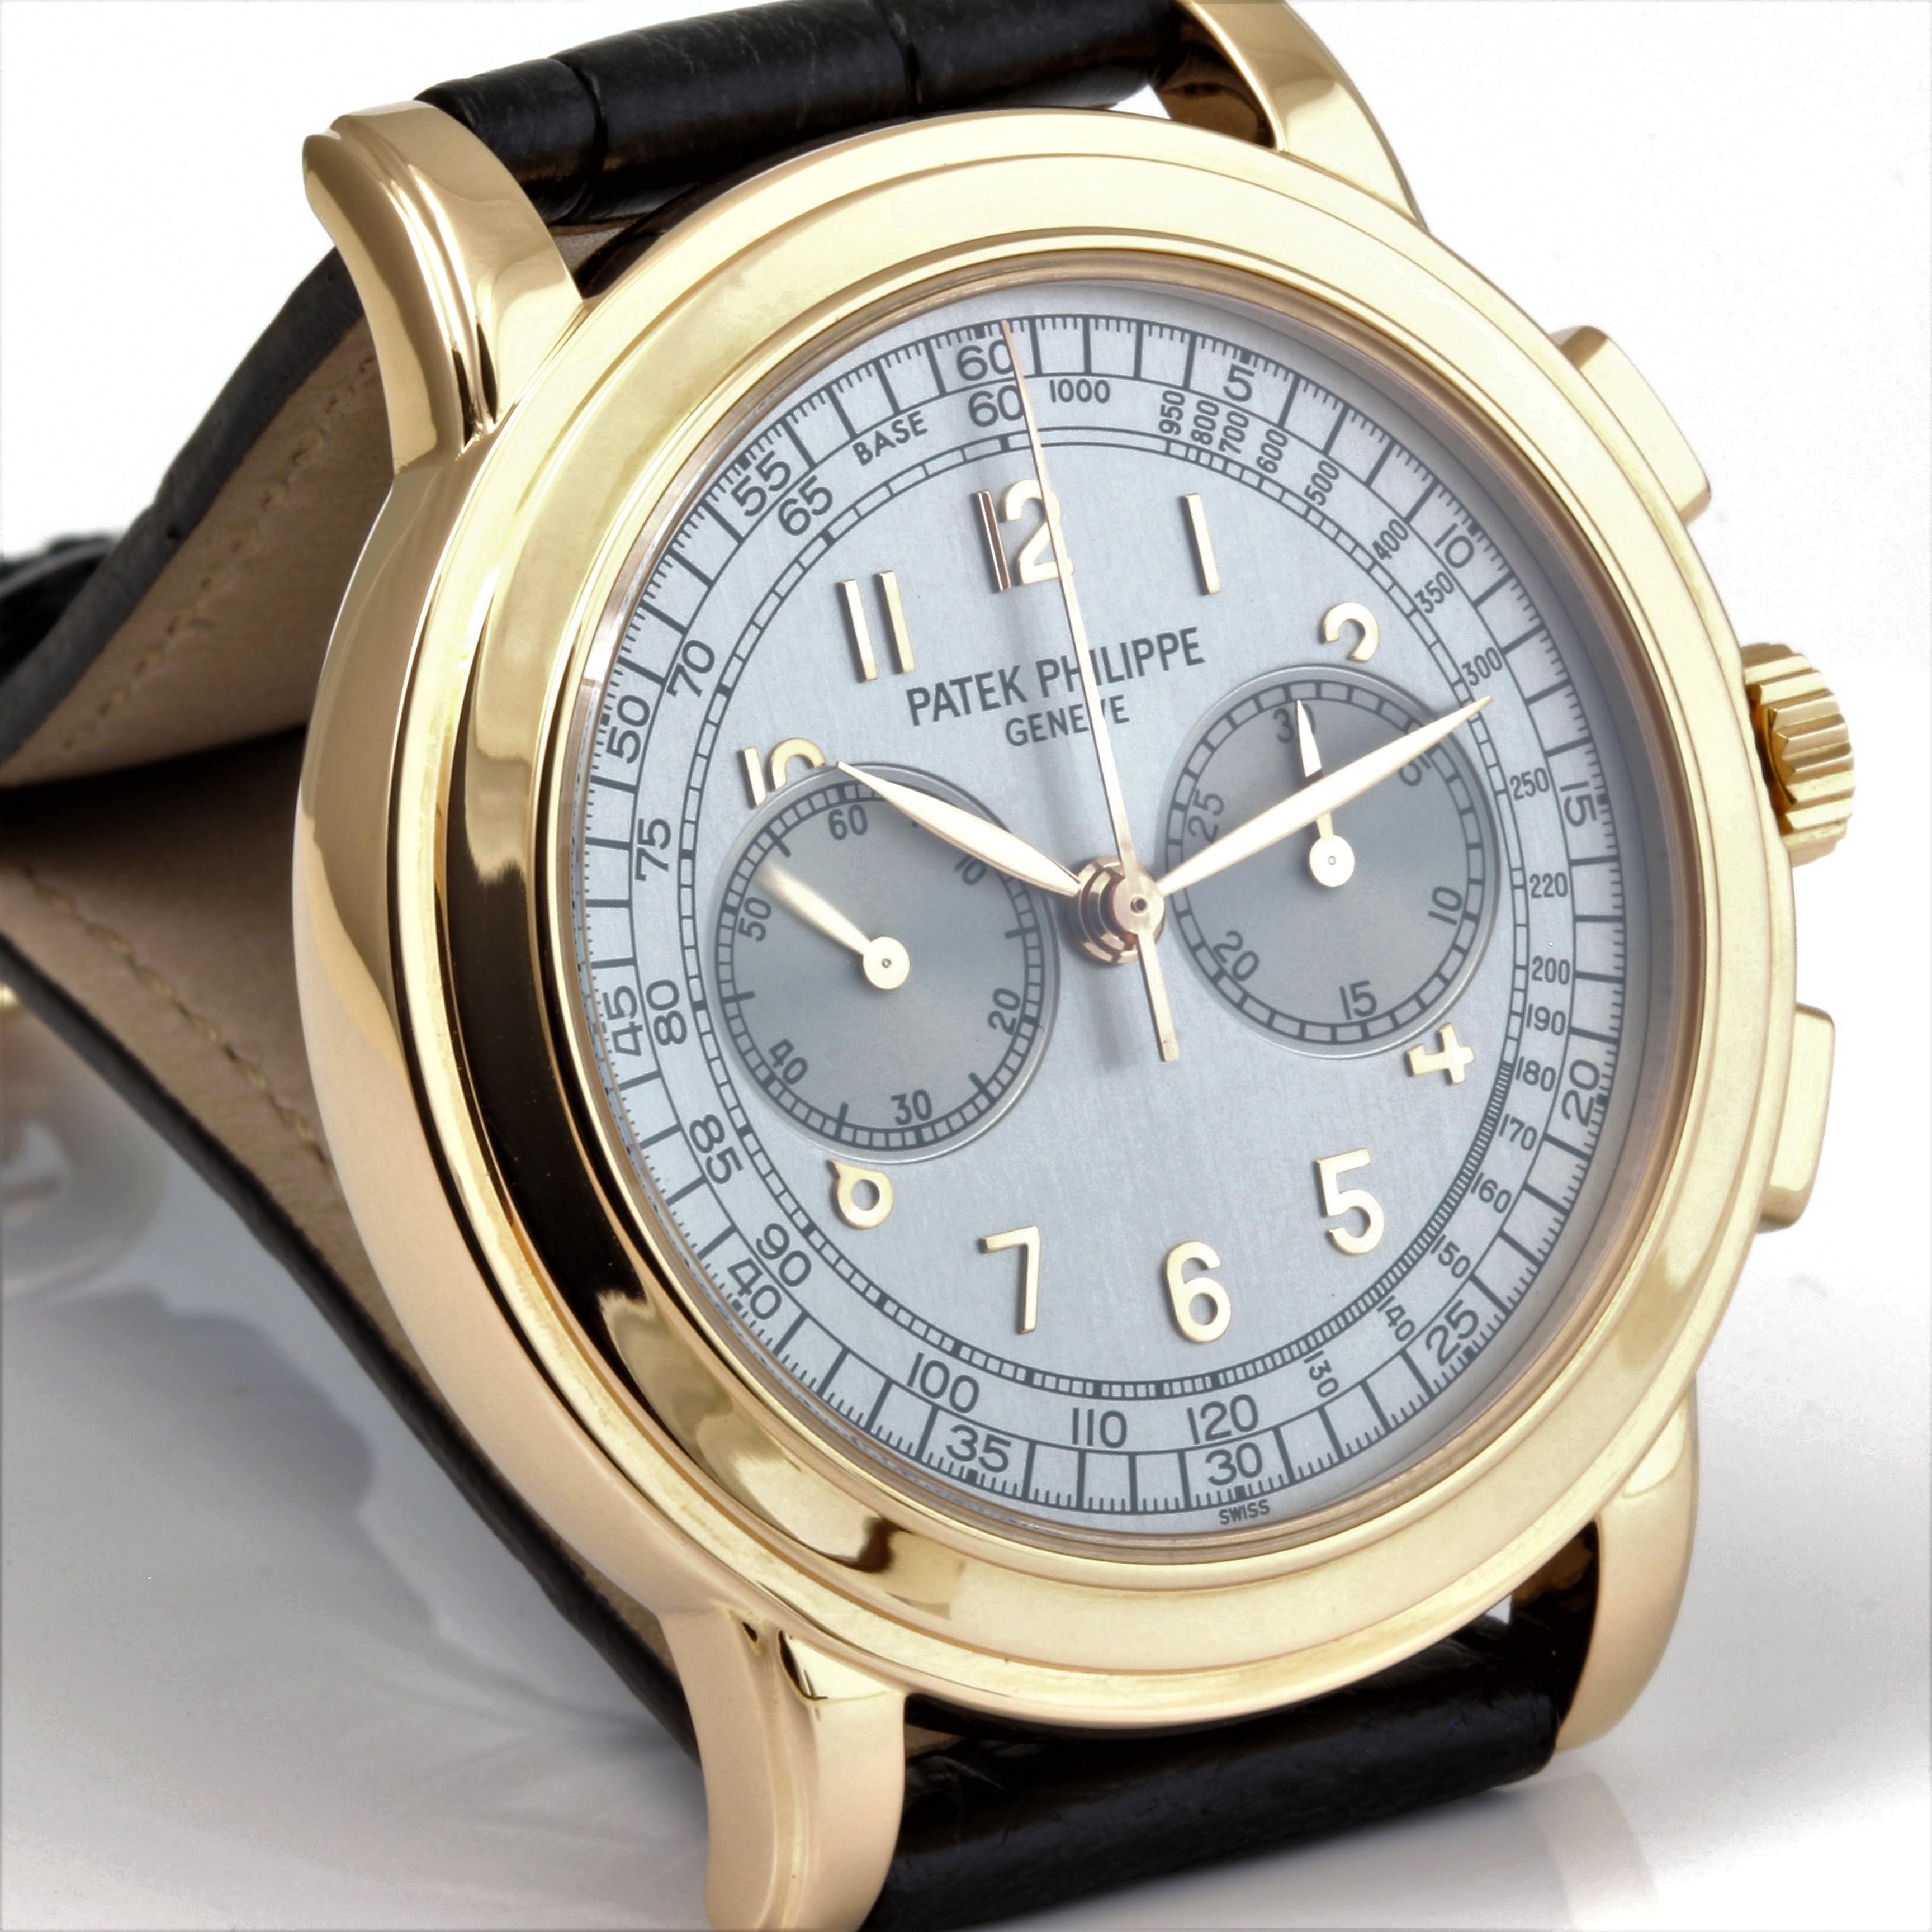 Men's Patek Philippe 5070R- Rose Gold Chronograph Watch, Case, circa 2004